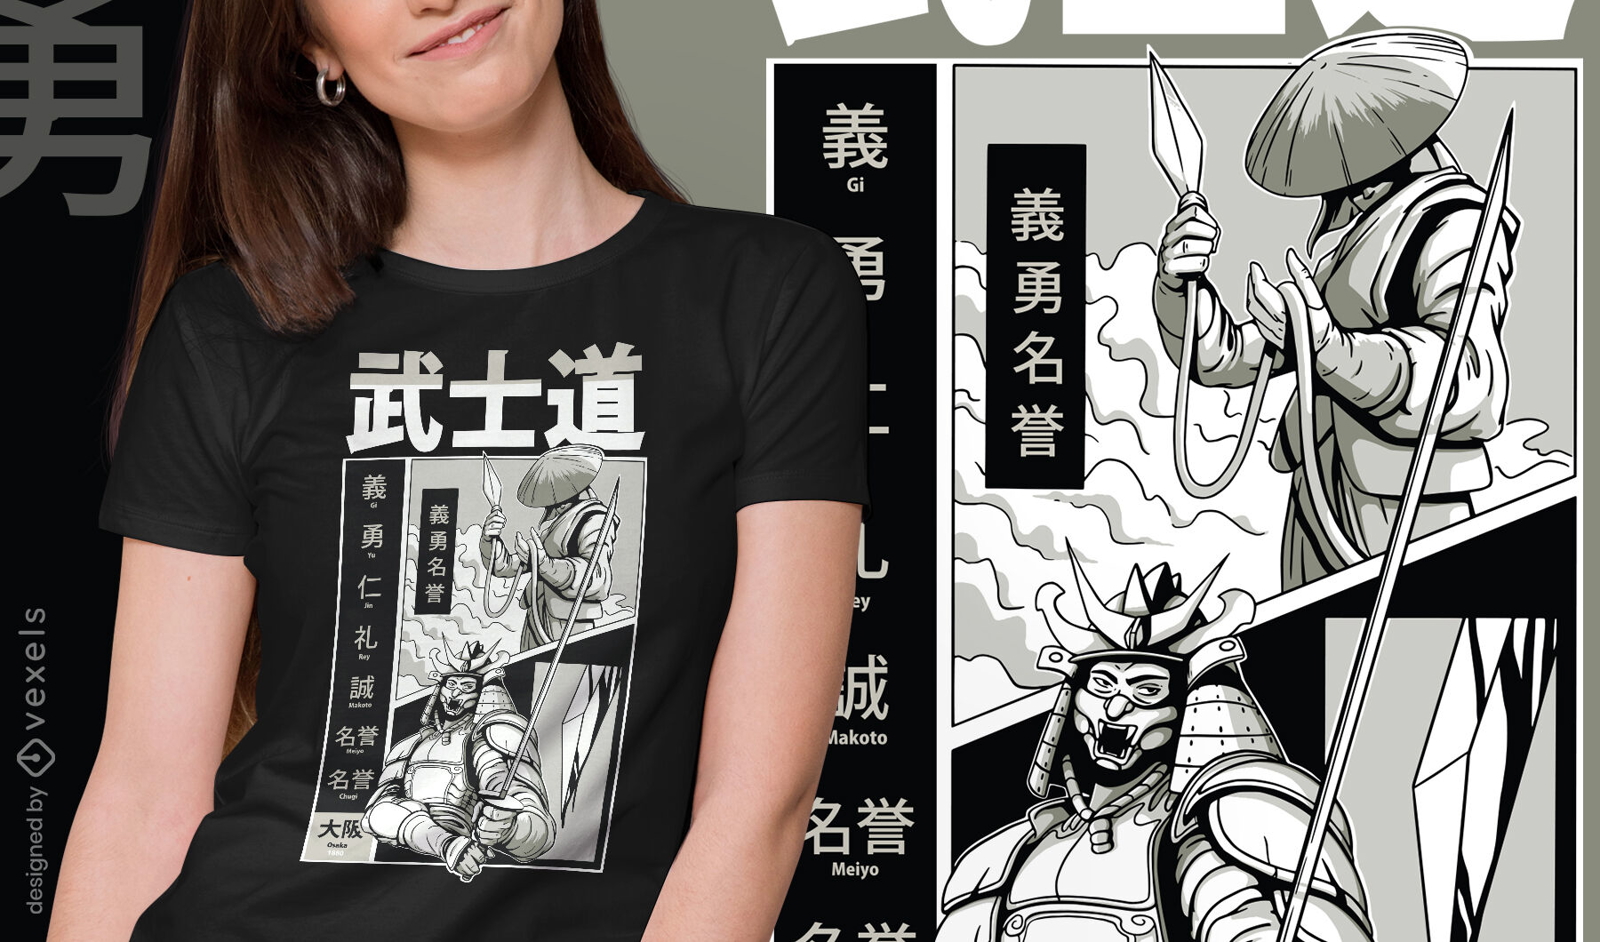 Dise?o de camiseta de dos guerreros japoneses.